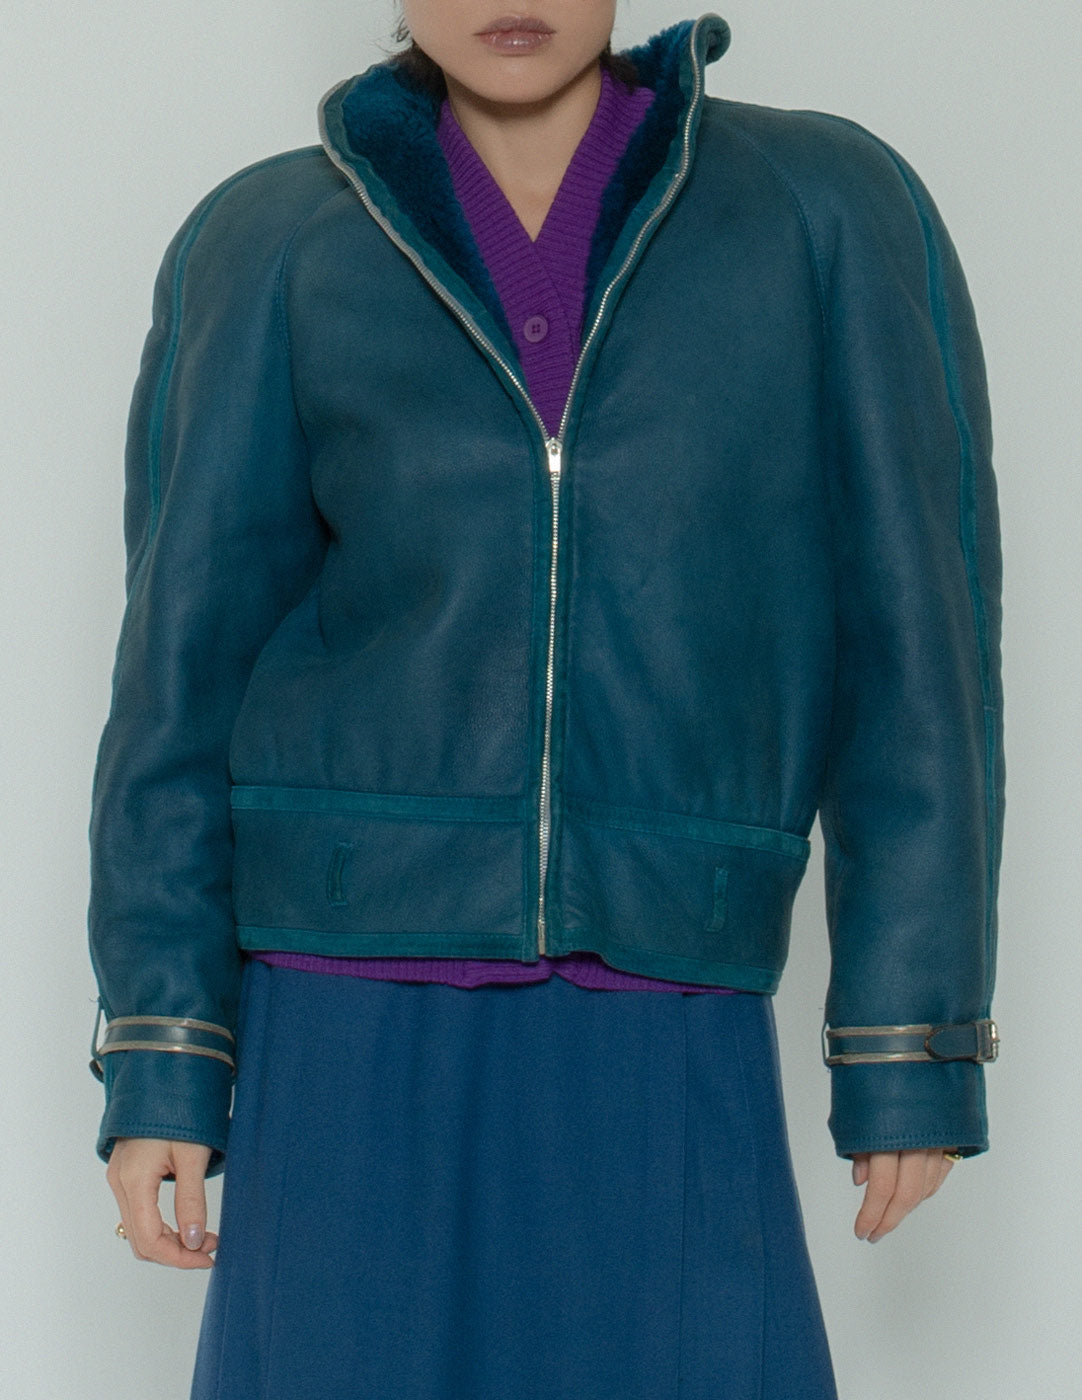 Gianni Versace vintage teal shearling bomber jacket front detail